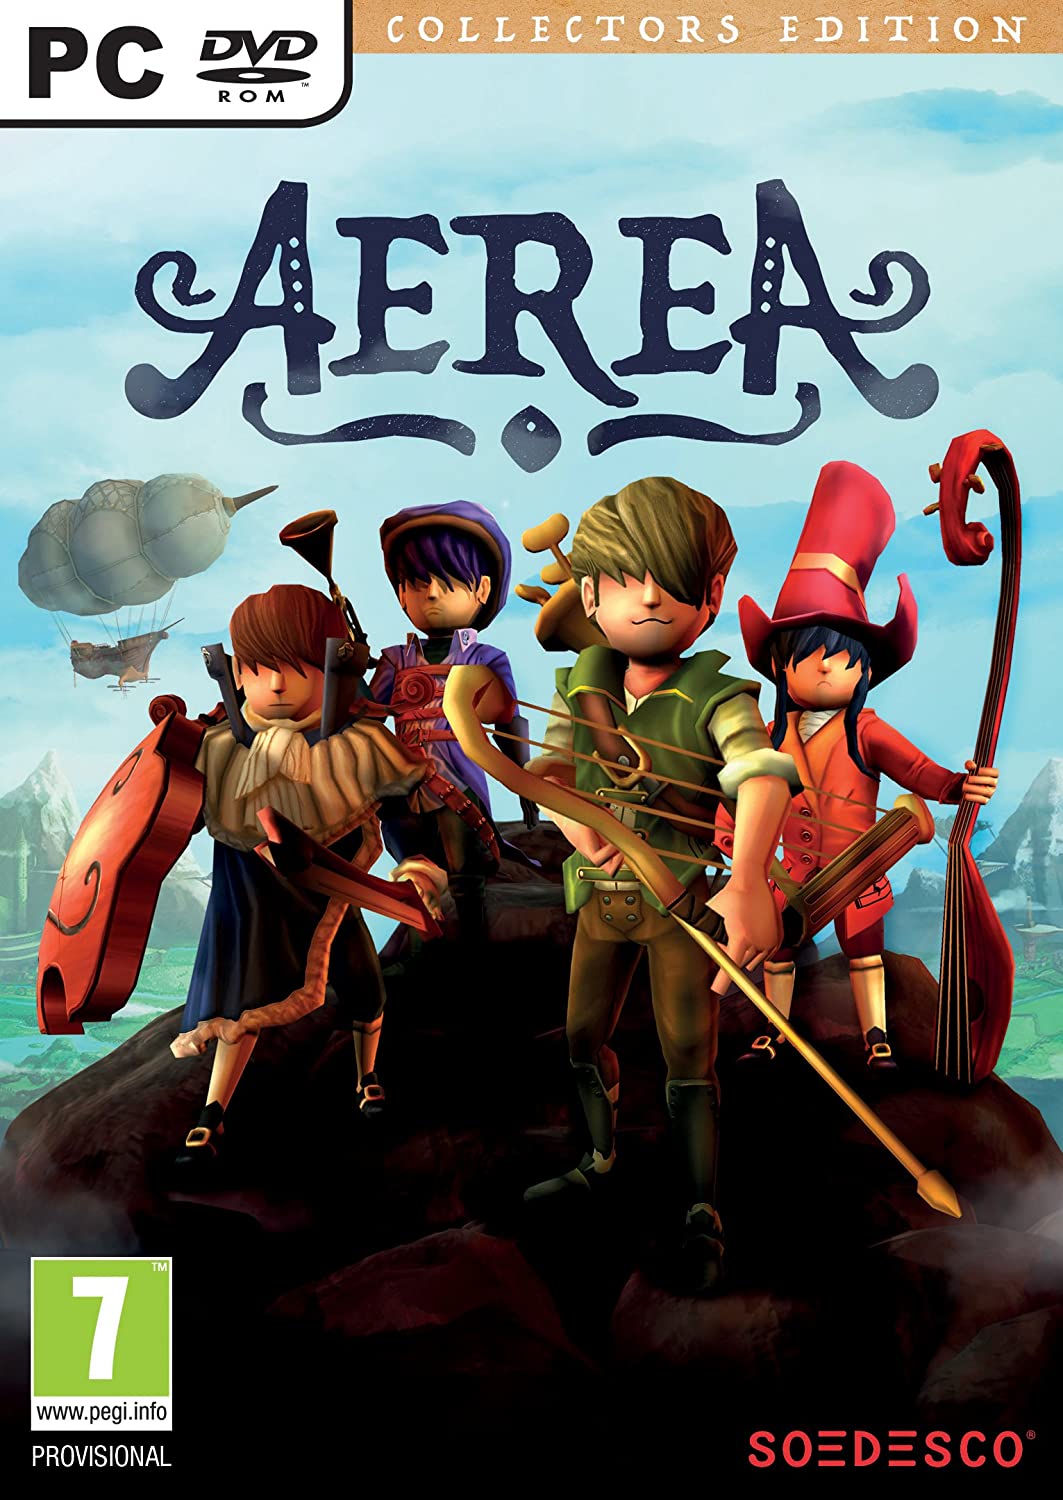 Aerea Collector's Edition (PC-DVD)